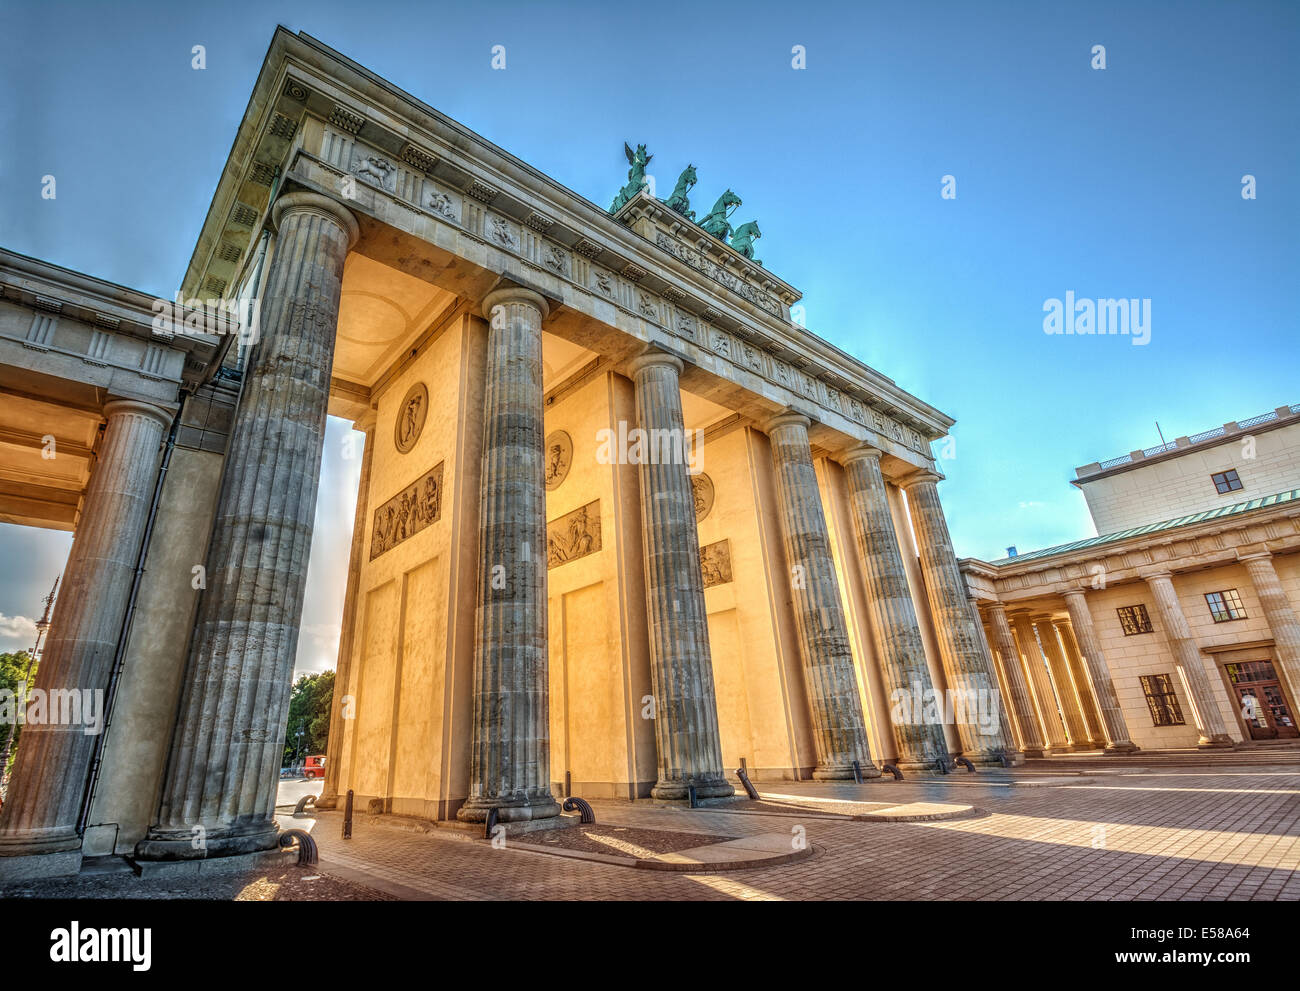 Brandenburg Gate (1788) at sunset, Berlin, Germany. Hdr image. Stock Photo